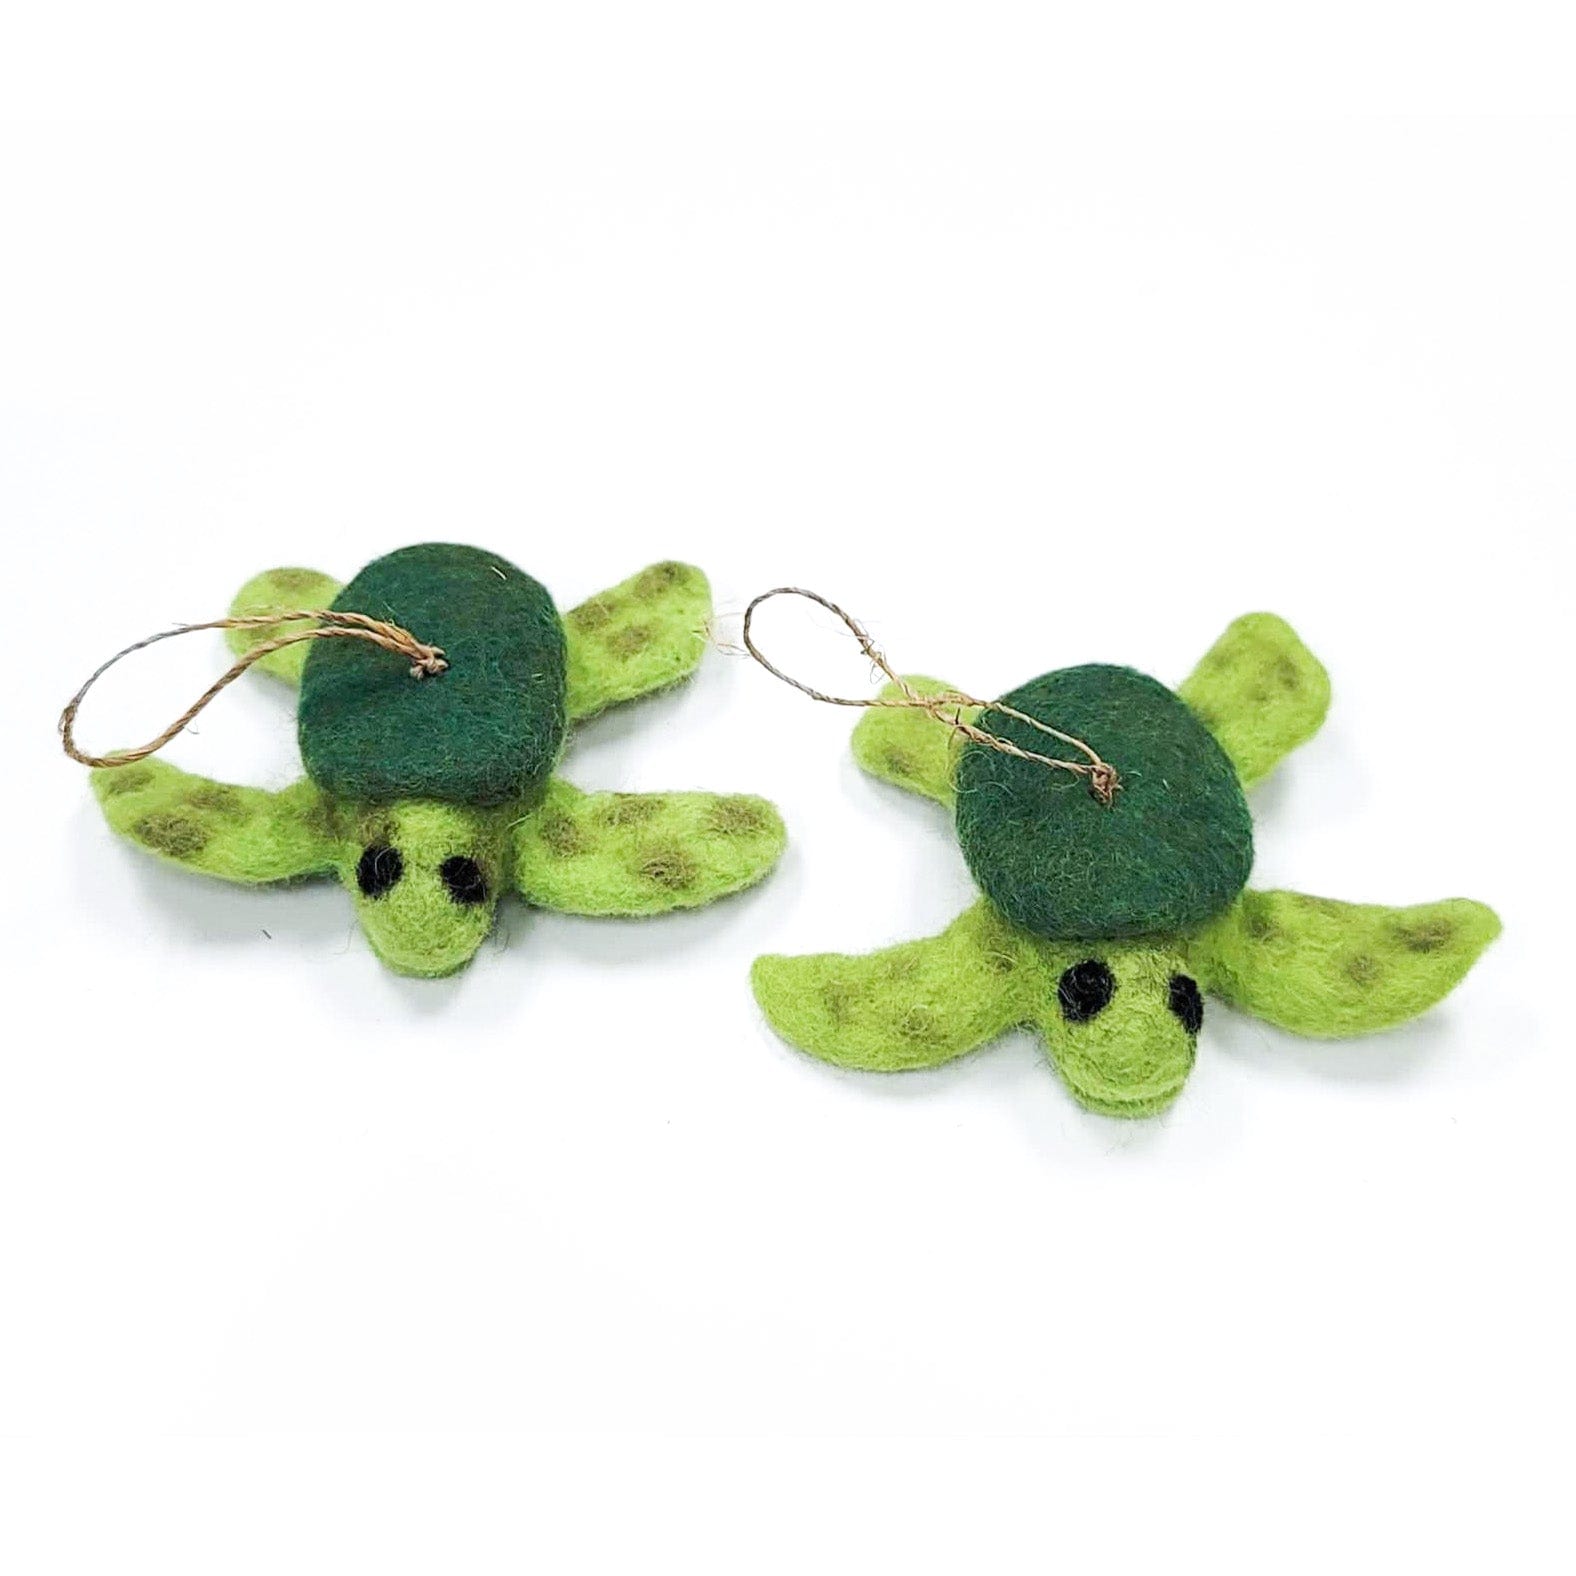 Tiny Turtles - Set of 2